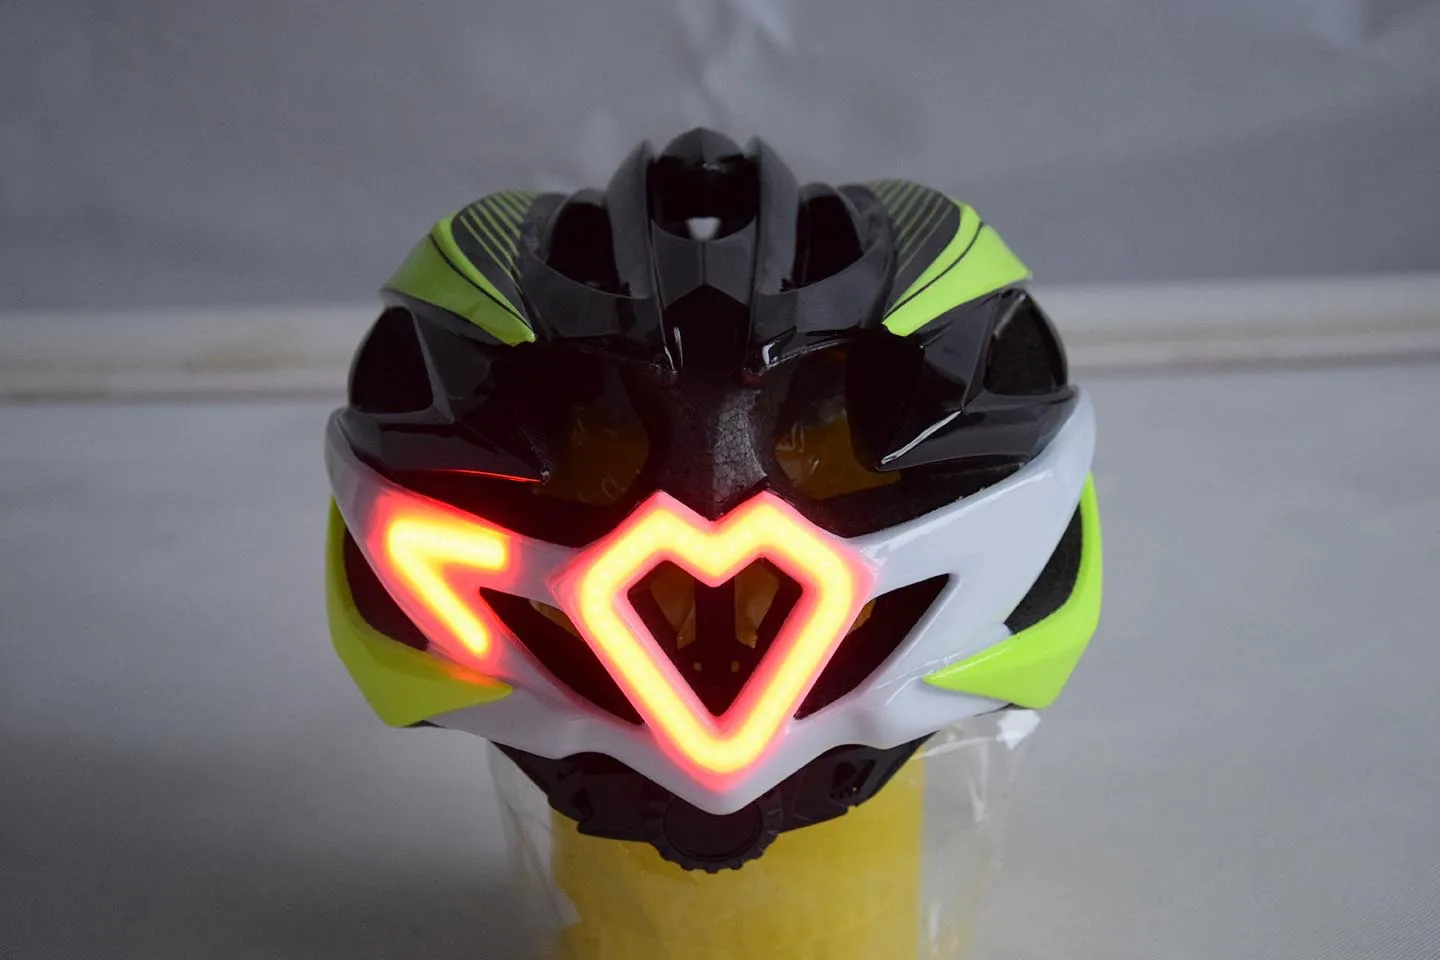 Smart Remote control riding steering helmet LED light-emitting bike cycling helmet